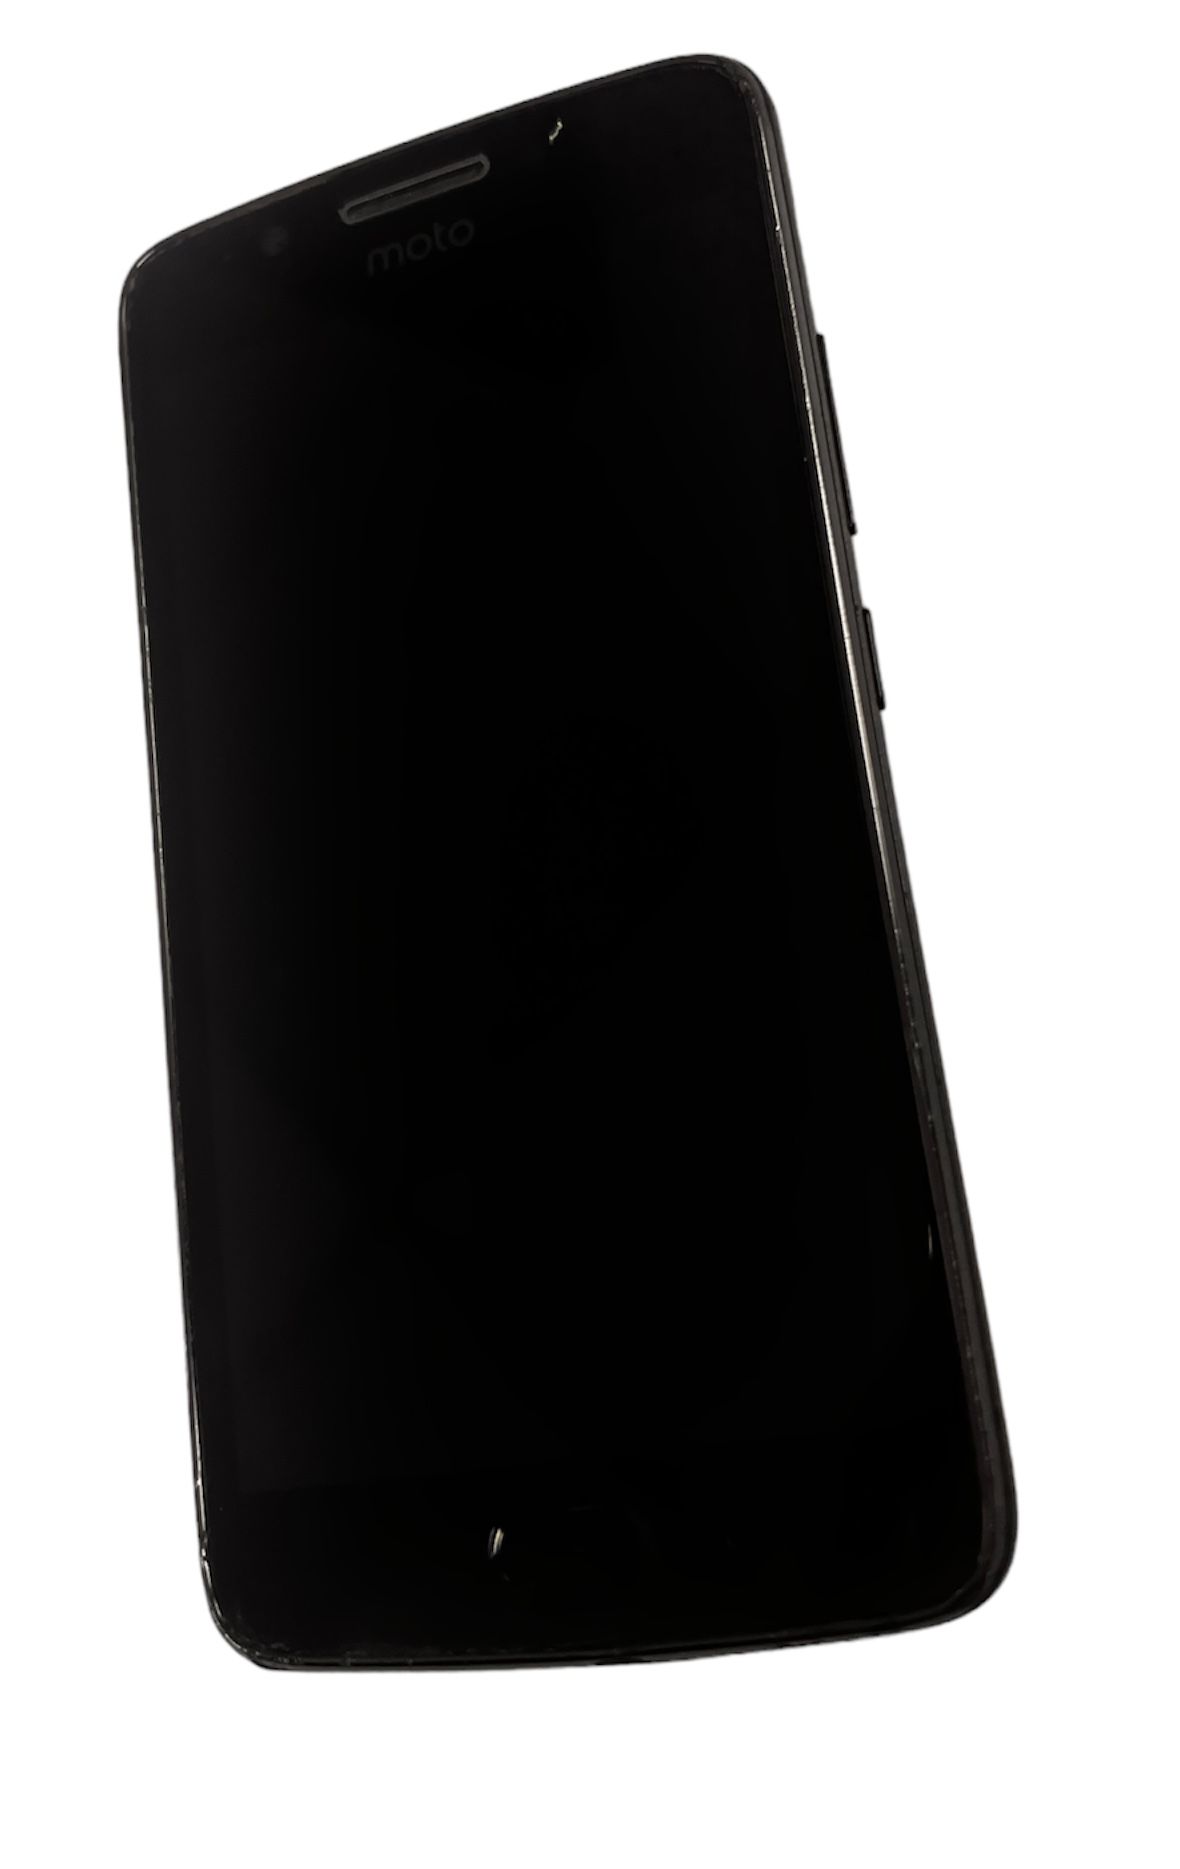 Motorola G5 - black